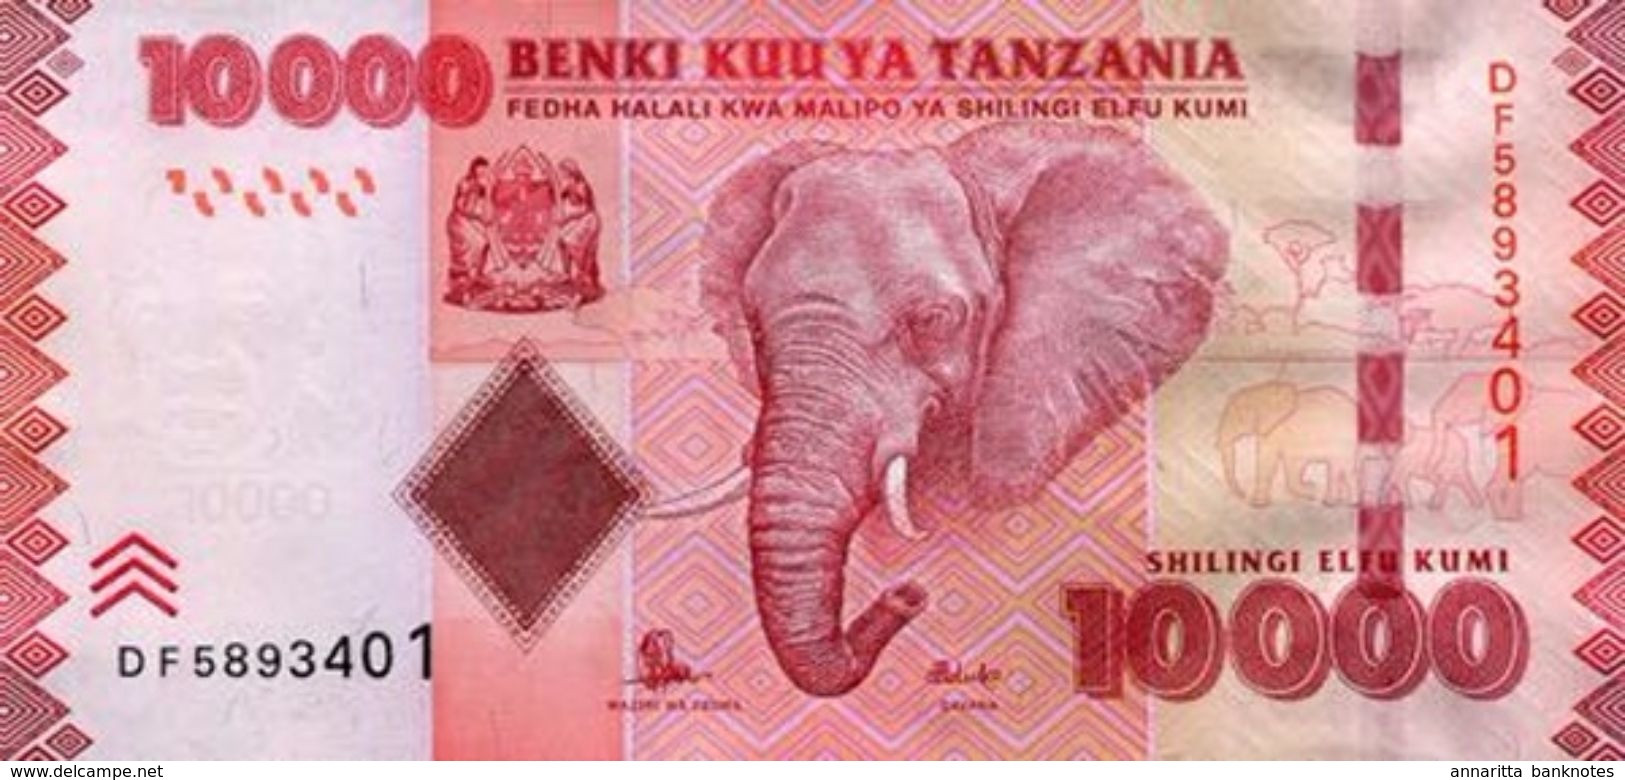 Tanzania (BOT) 10000 Shillings ND (2015) UNC Cat No. P-44b / TZ143b - Tansania